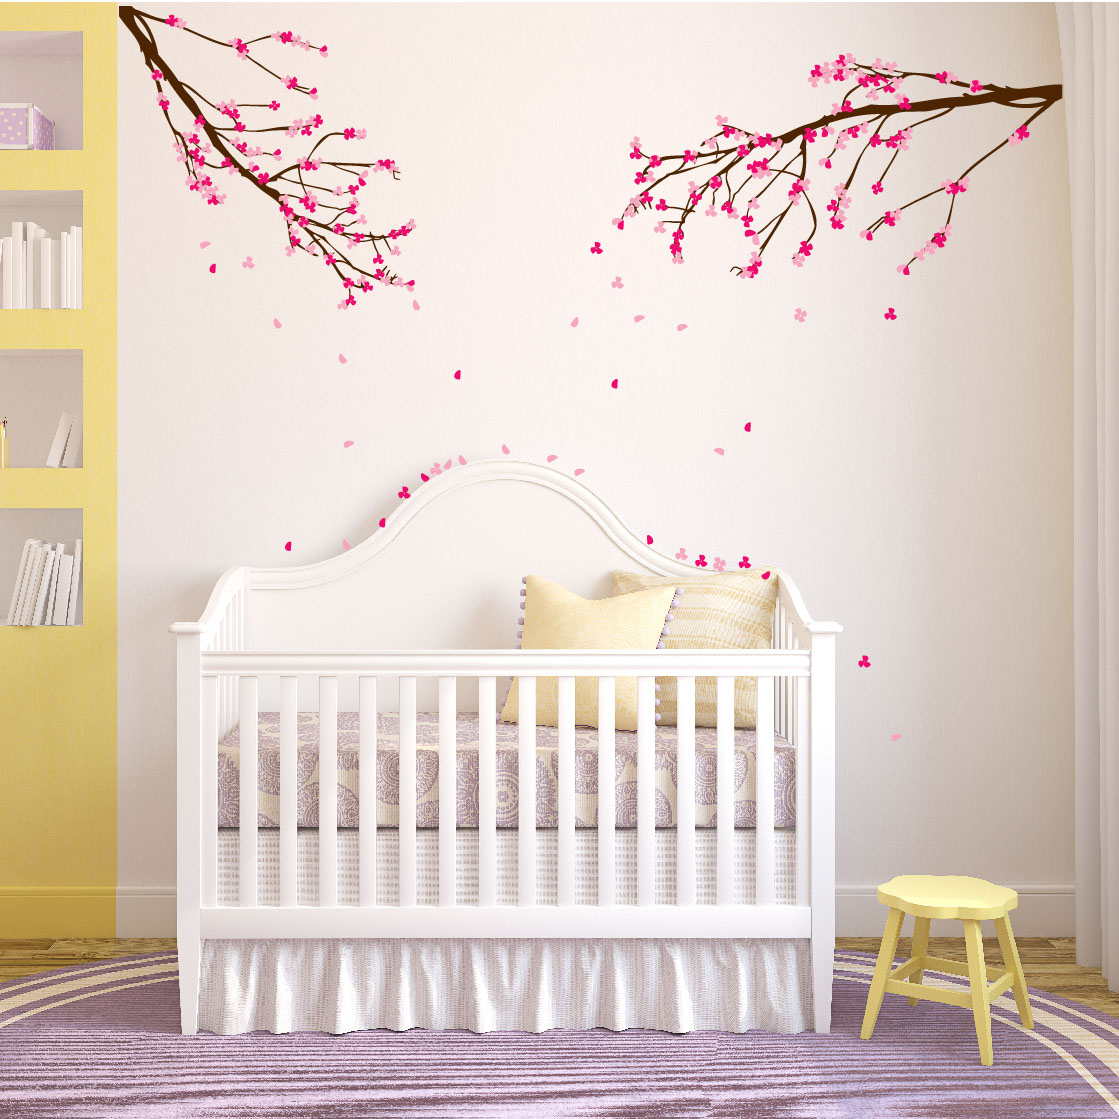 cherry-blossom-branch-nursery-wall-decals.jpg